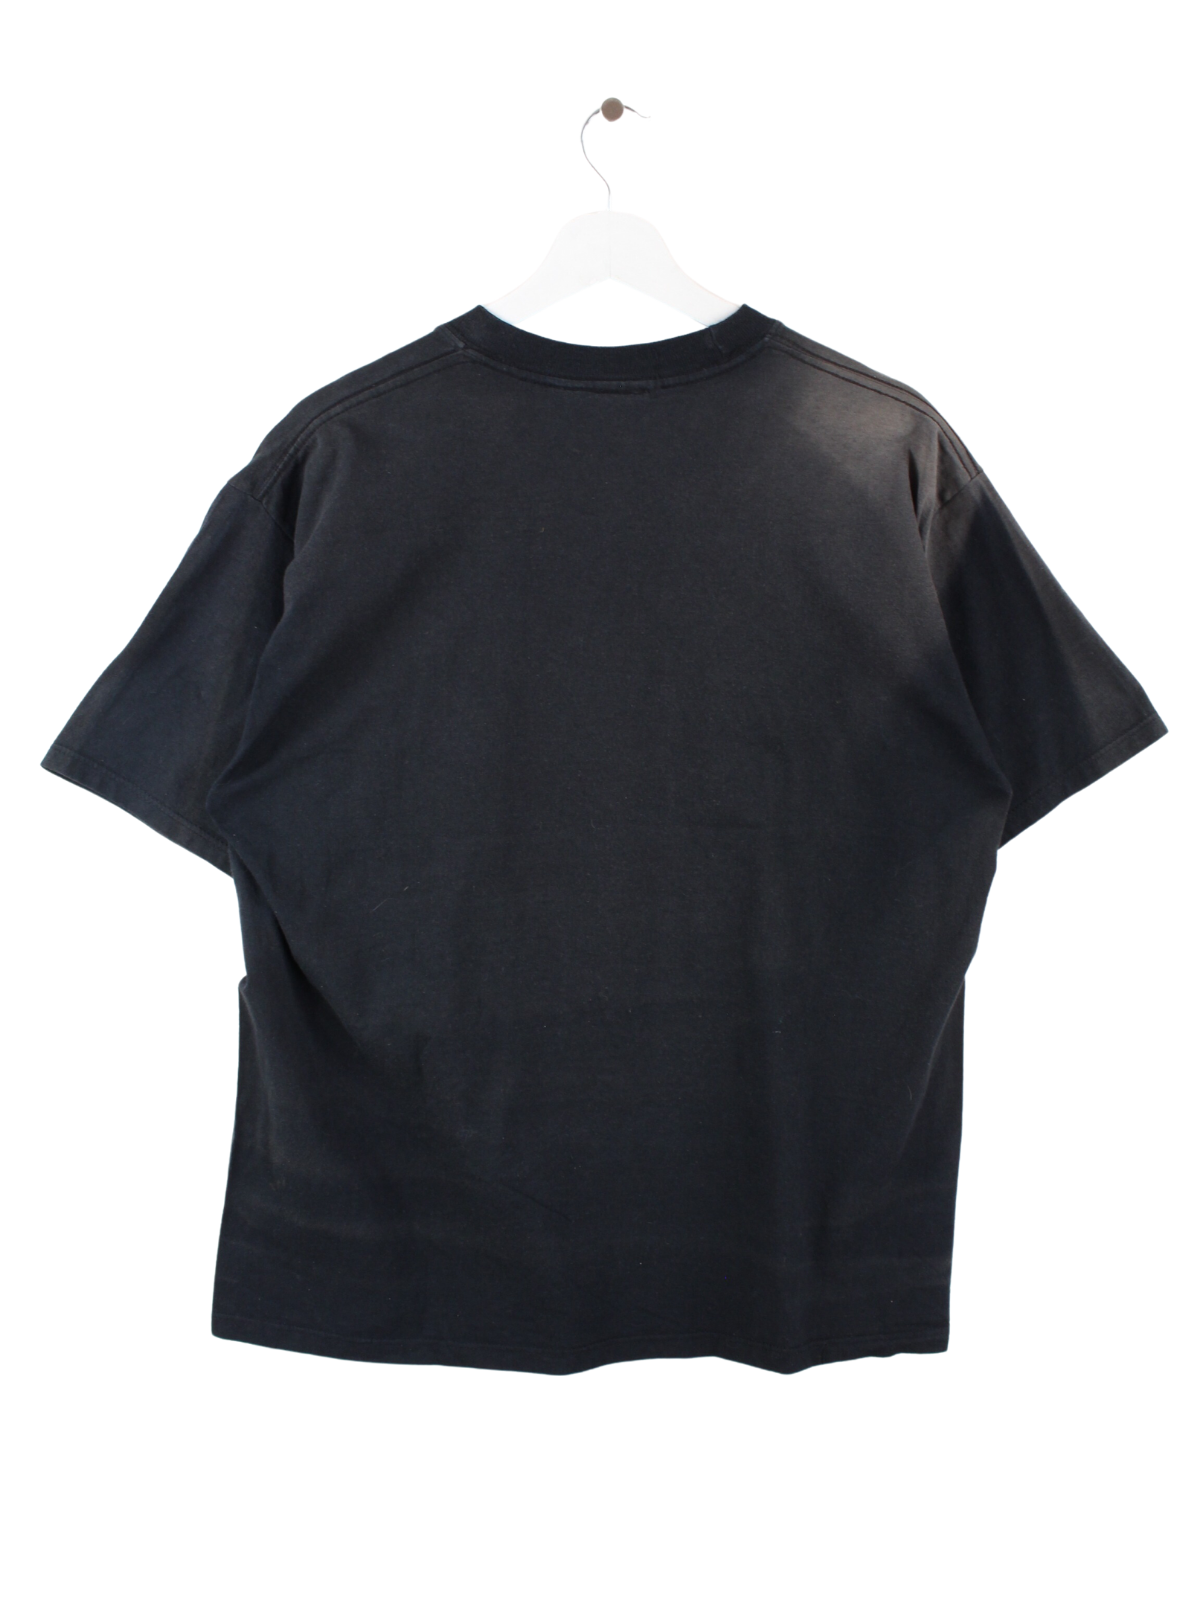 Vintage Print T-Shirt Black XL